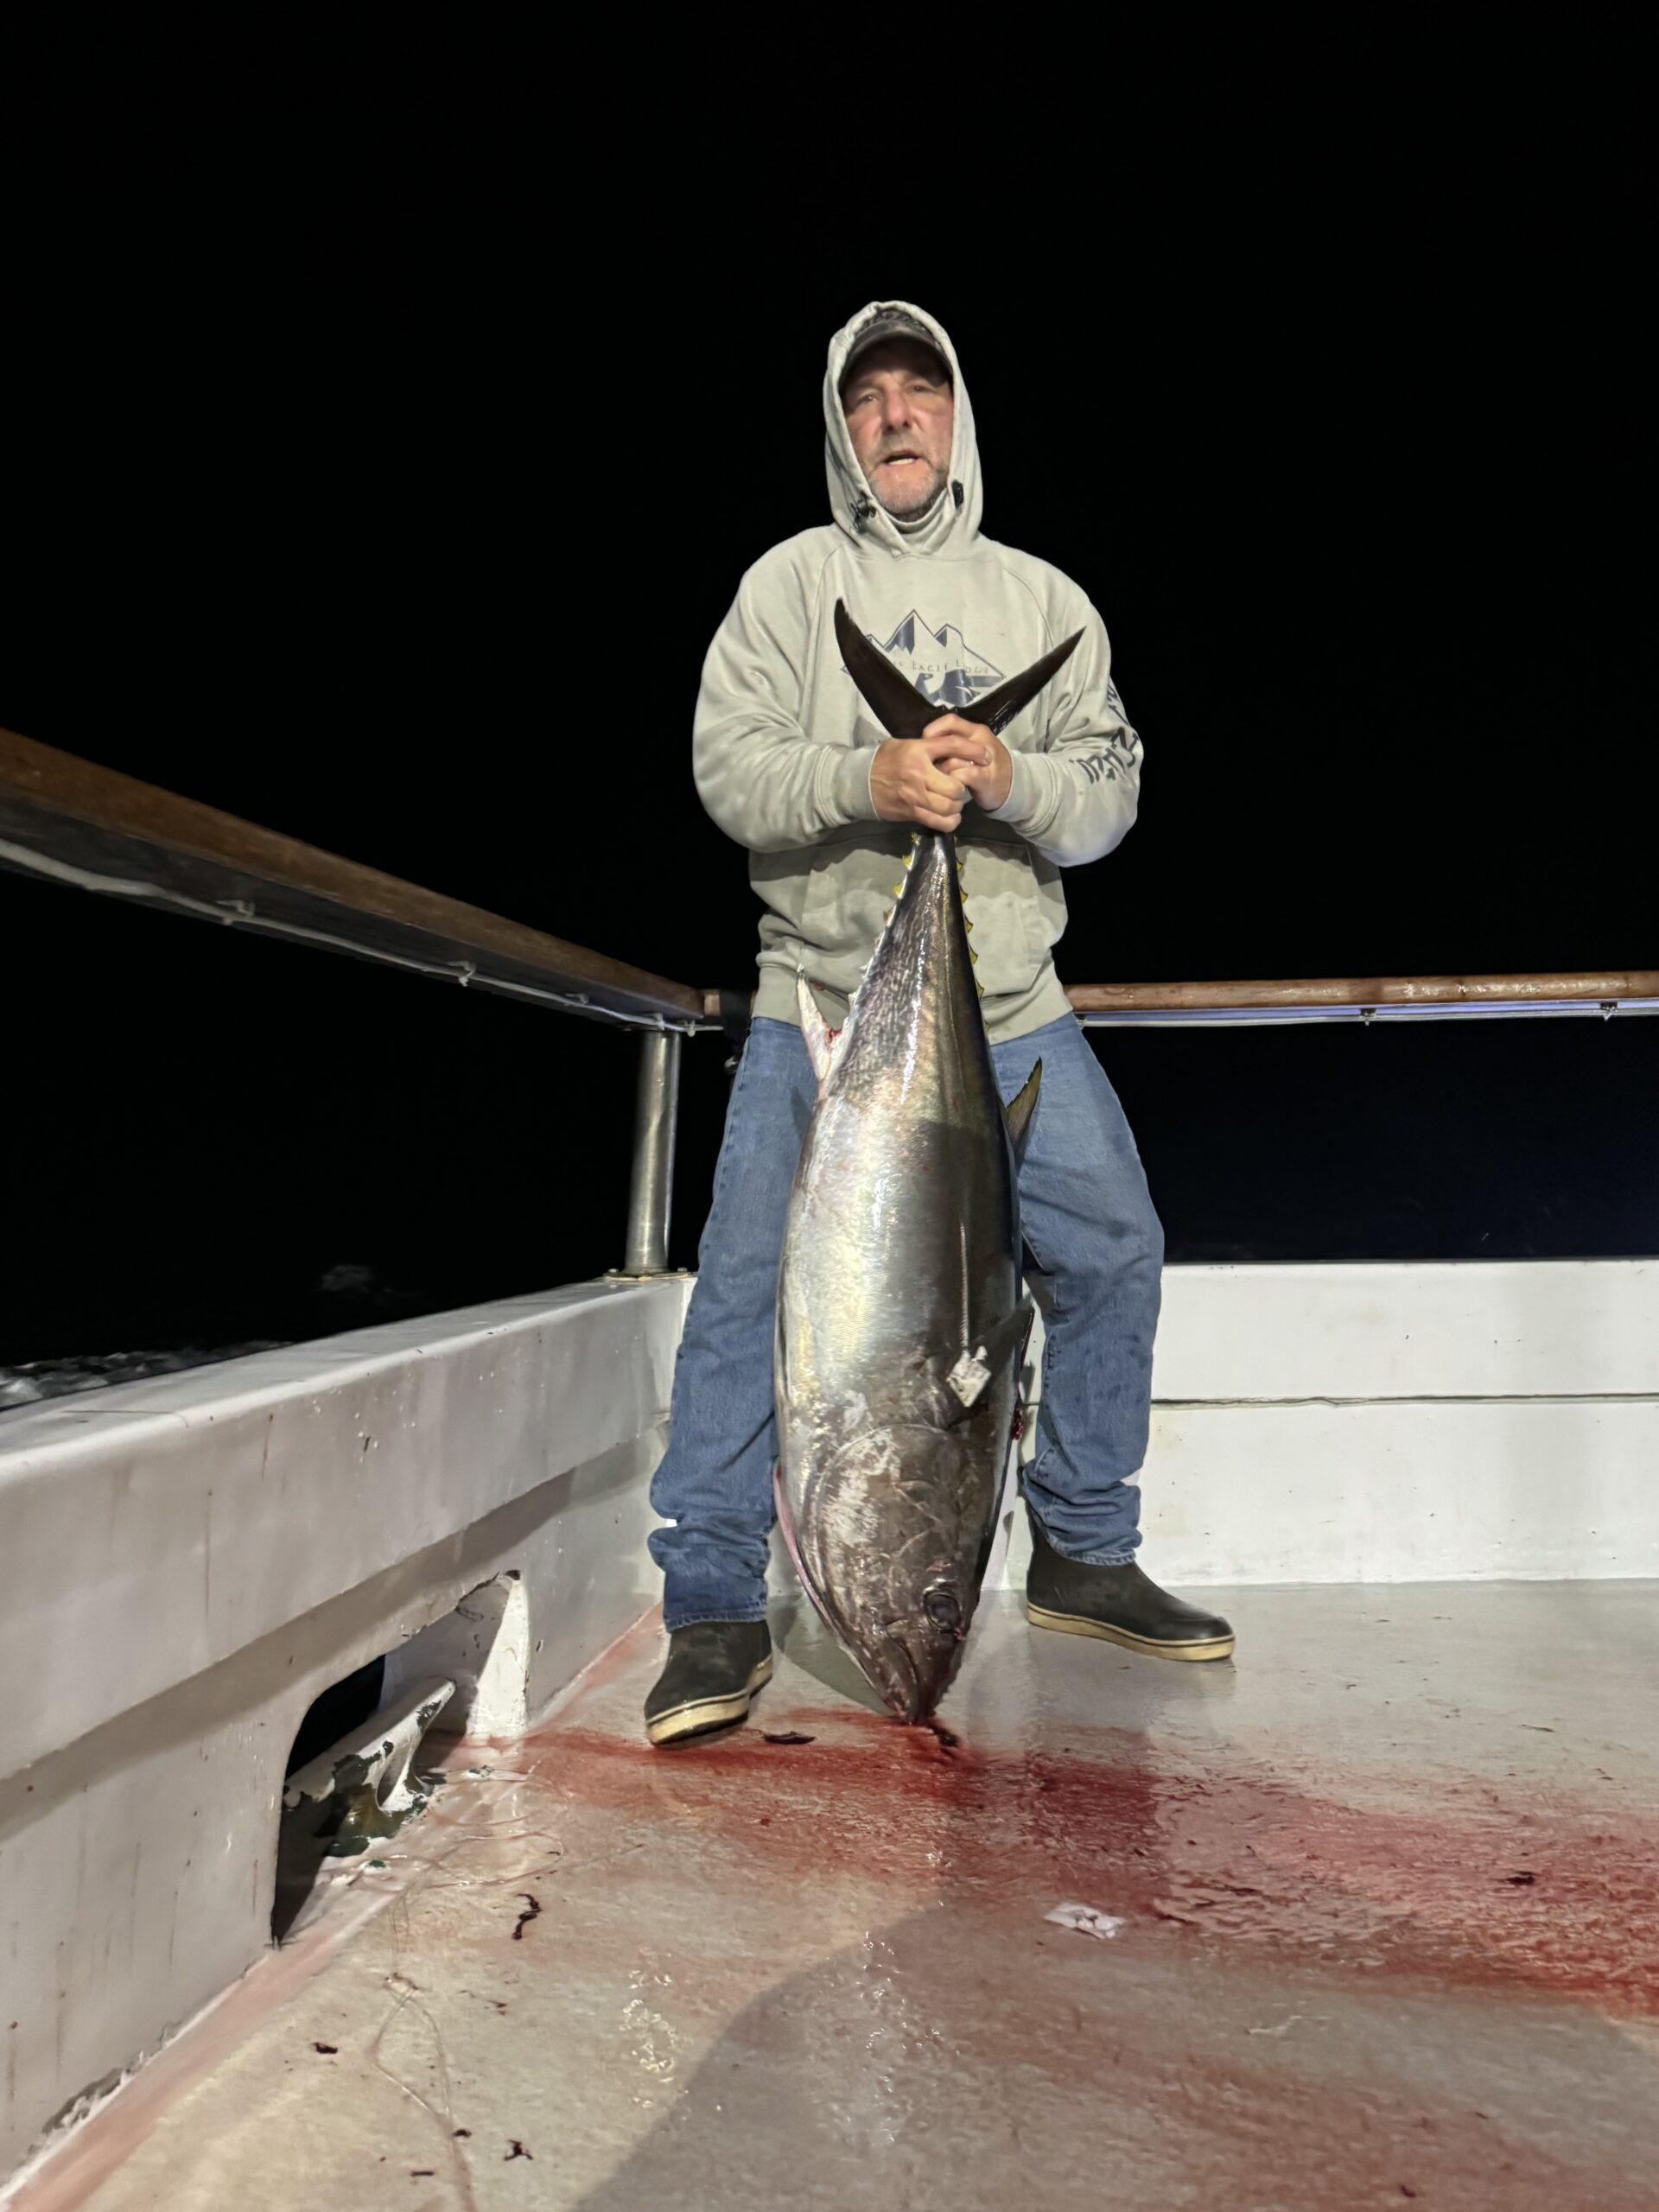 Angler with bluefin tuna